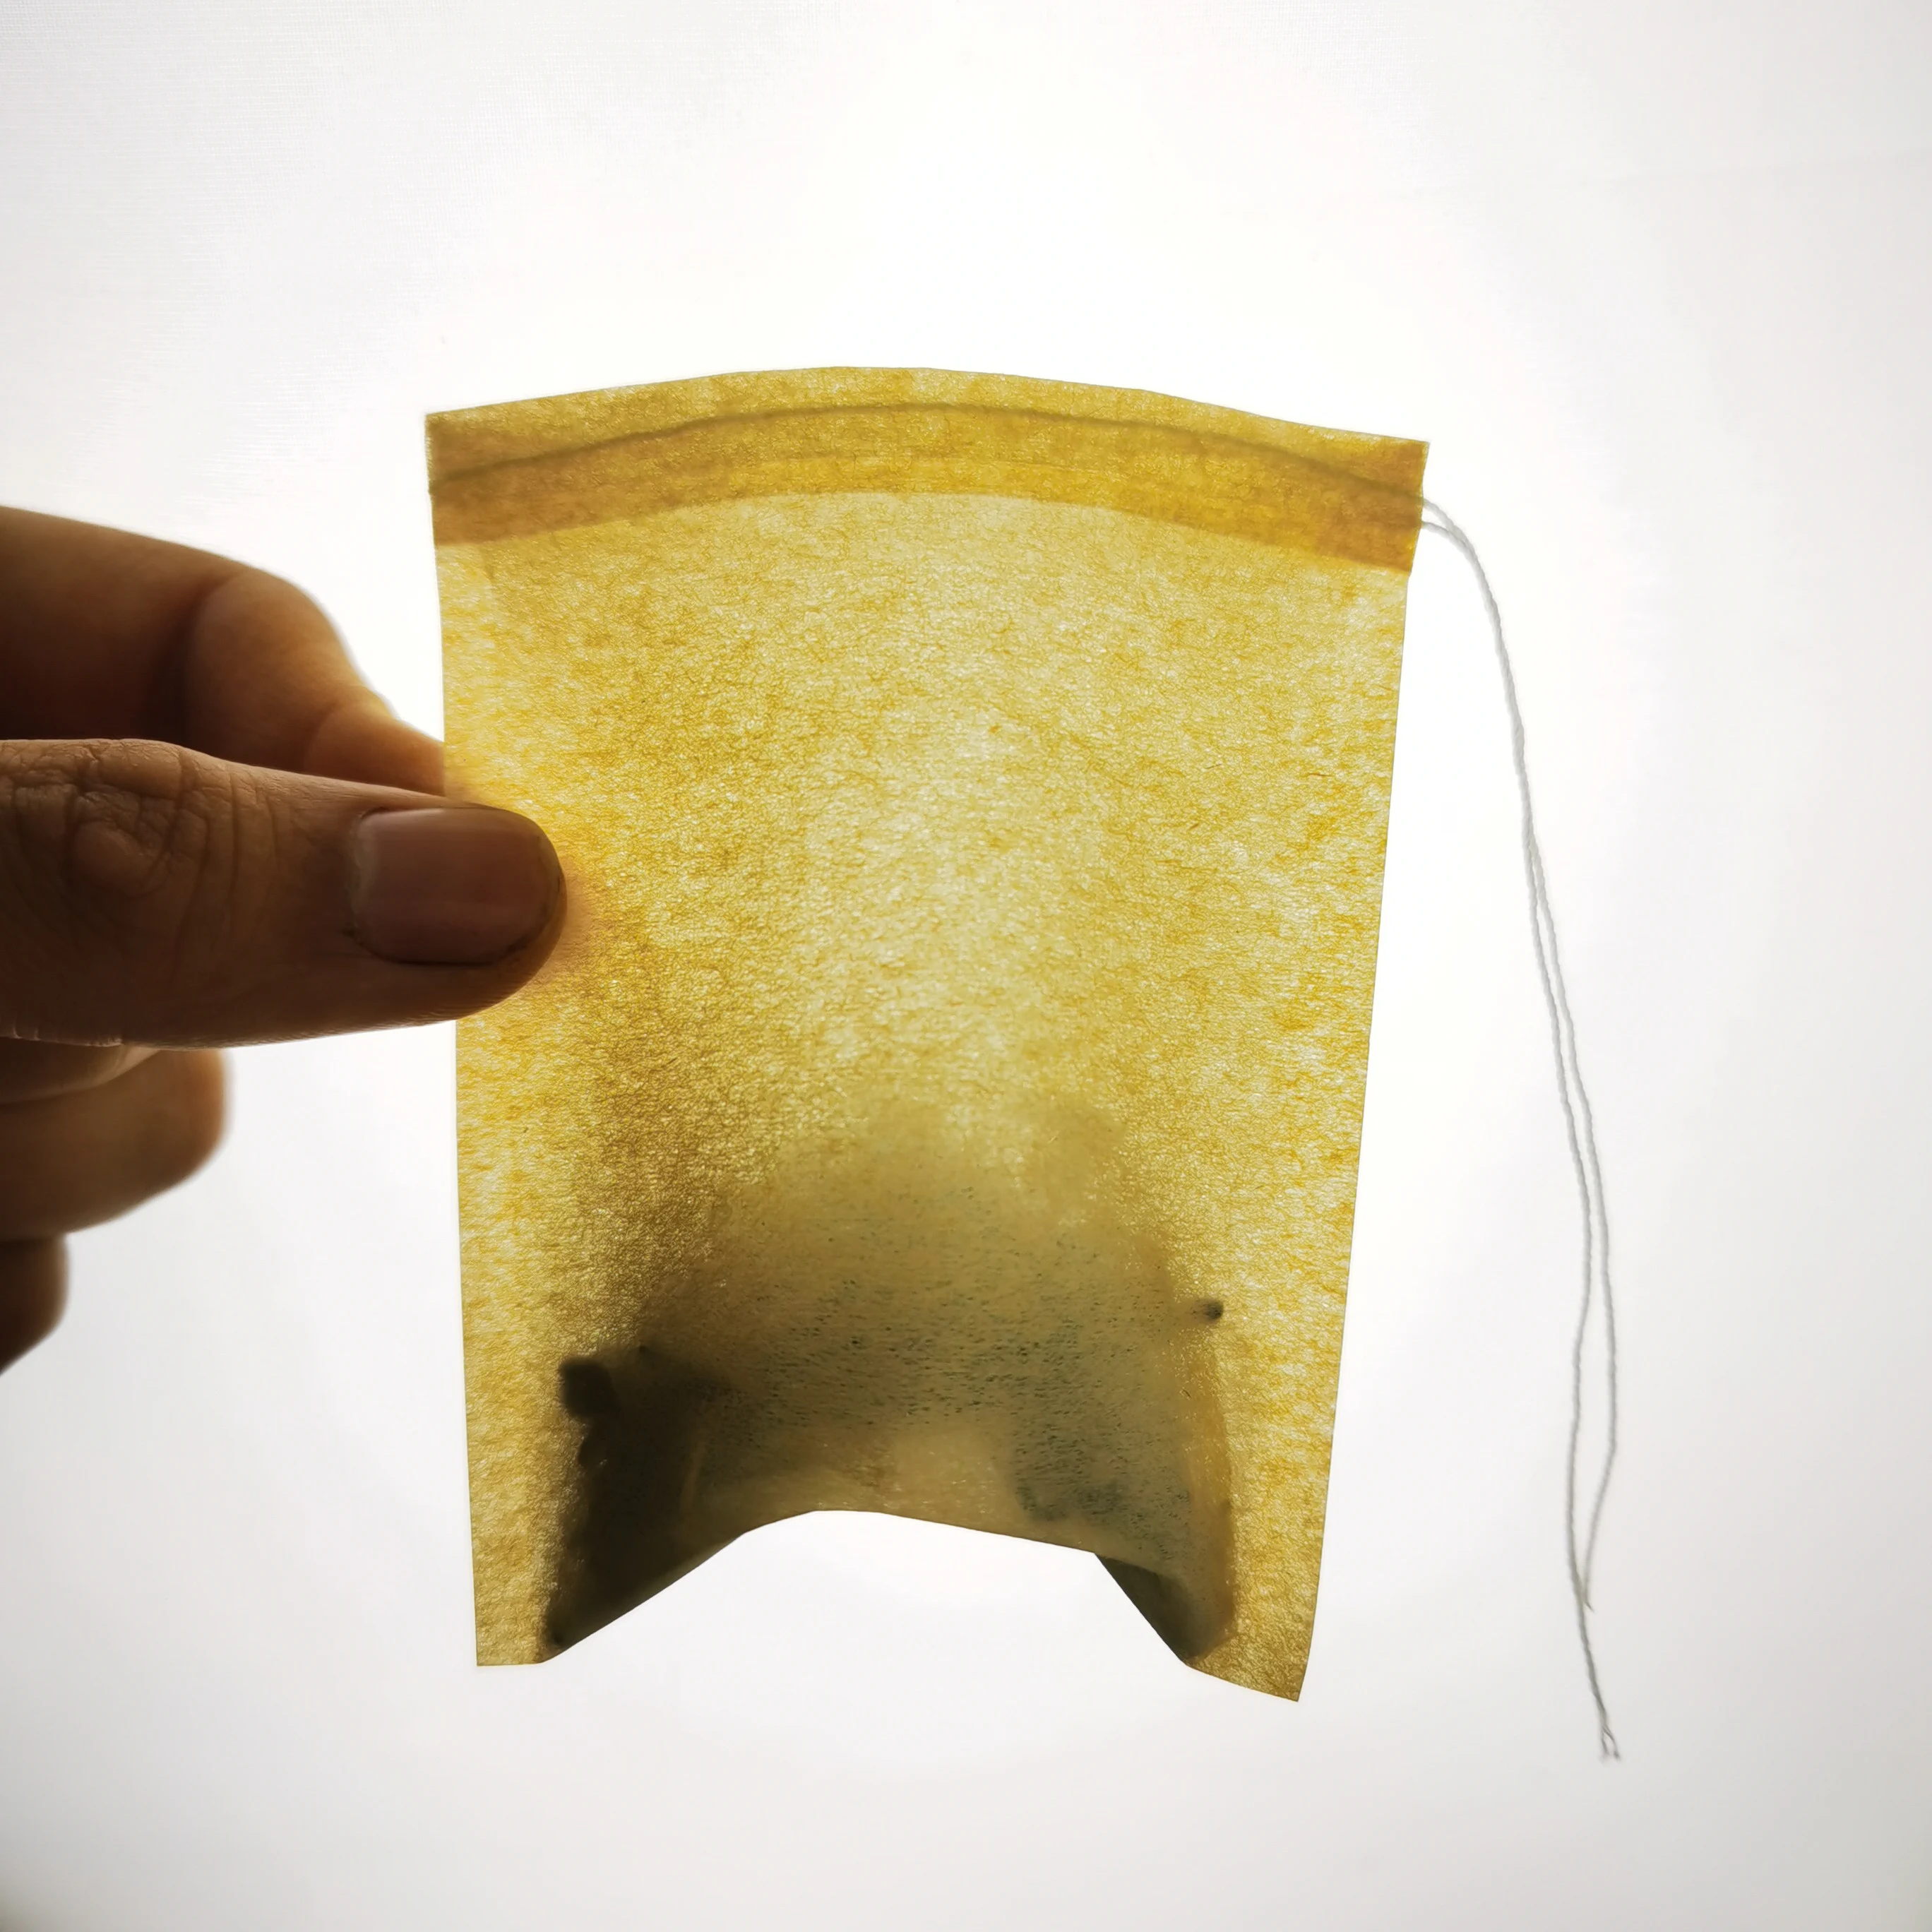 Factory Direct Sales 100 Pcs Filter Paper Square Tea Bag Filter Paper For Tea Bags (1600218554407)